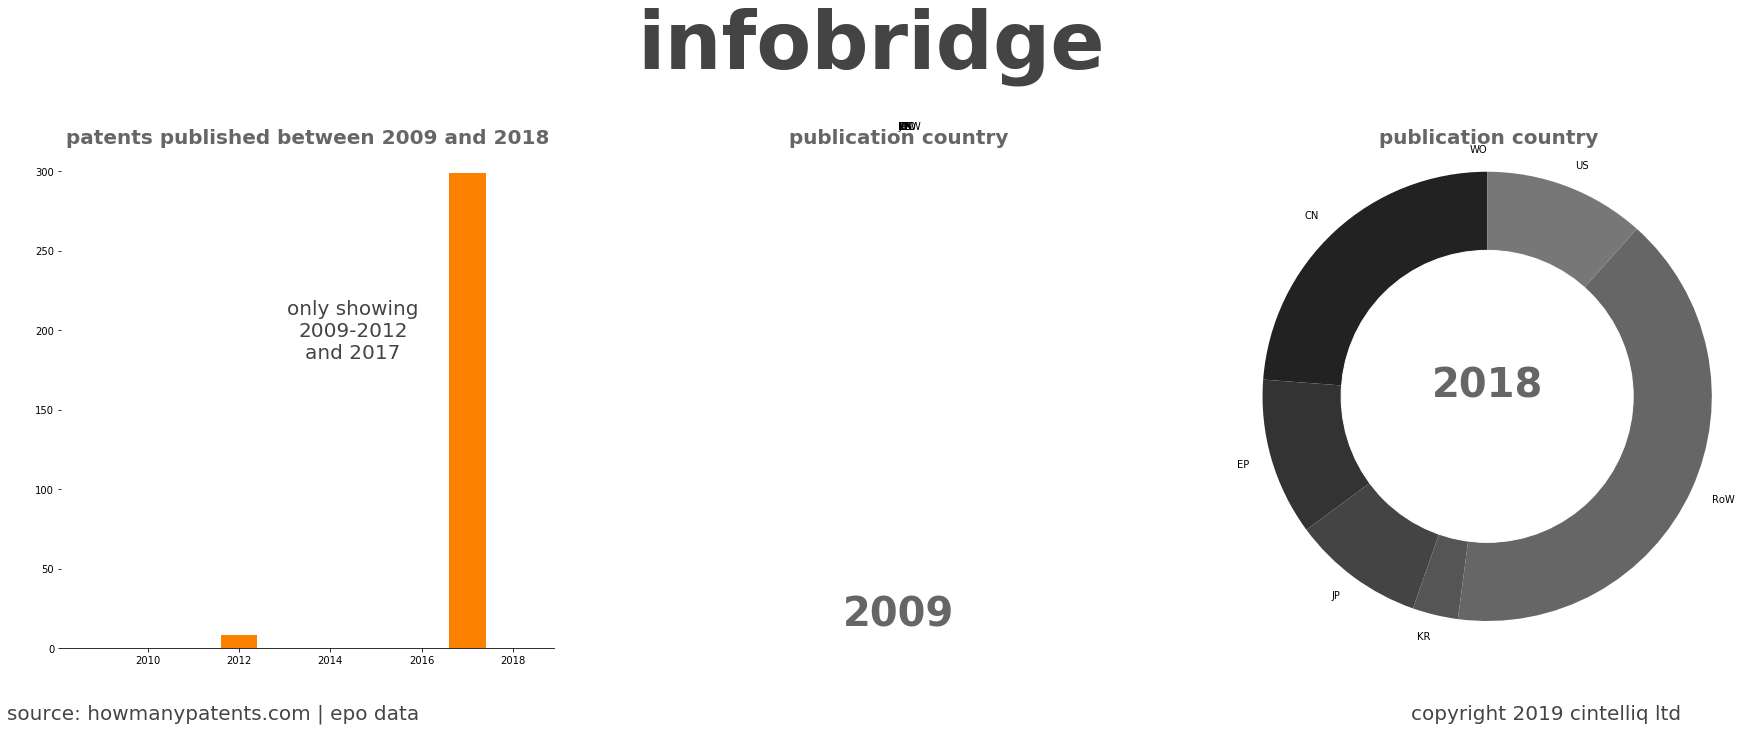 summary of patents for Infobridge